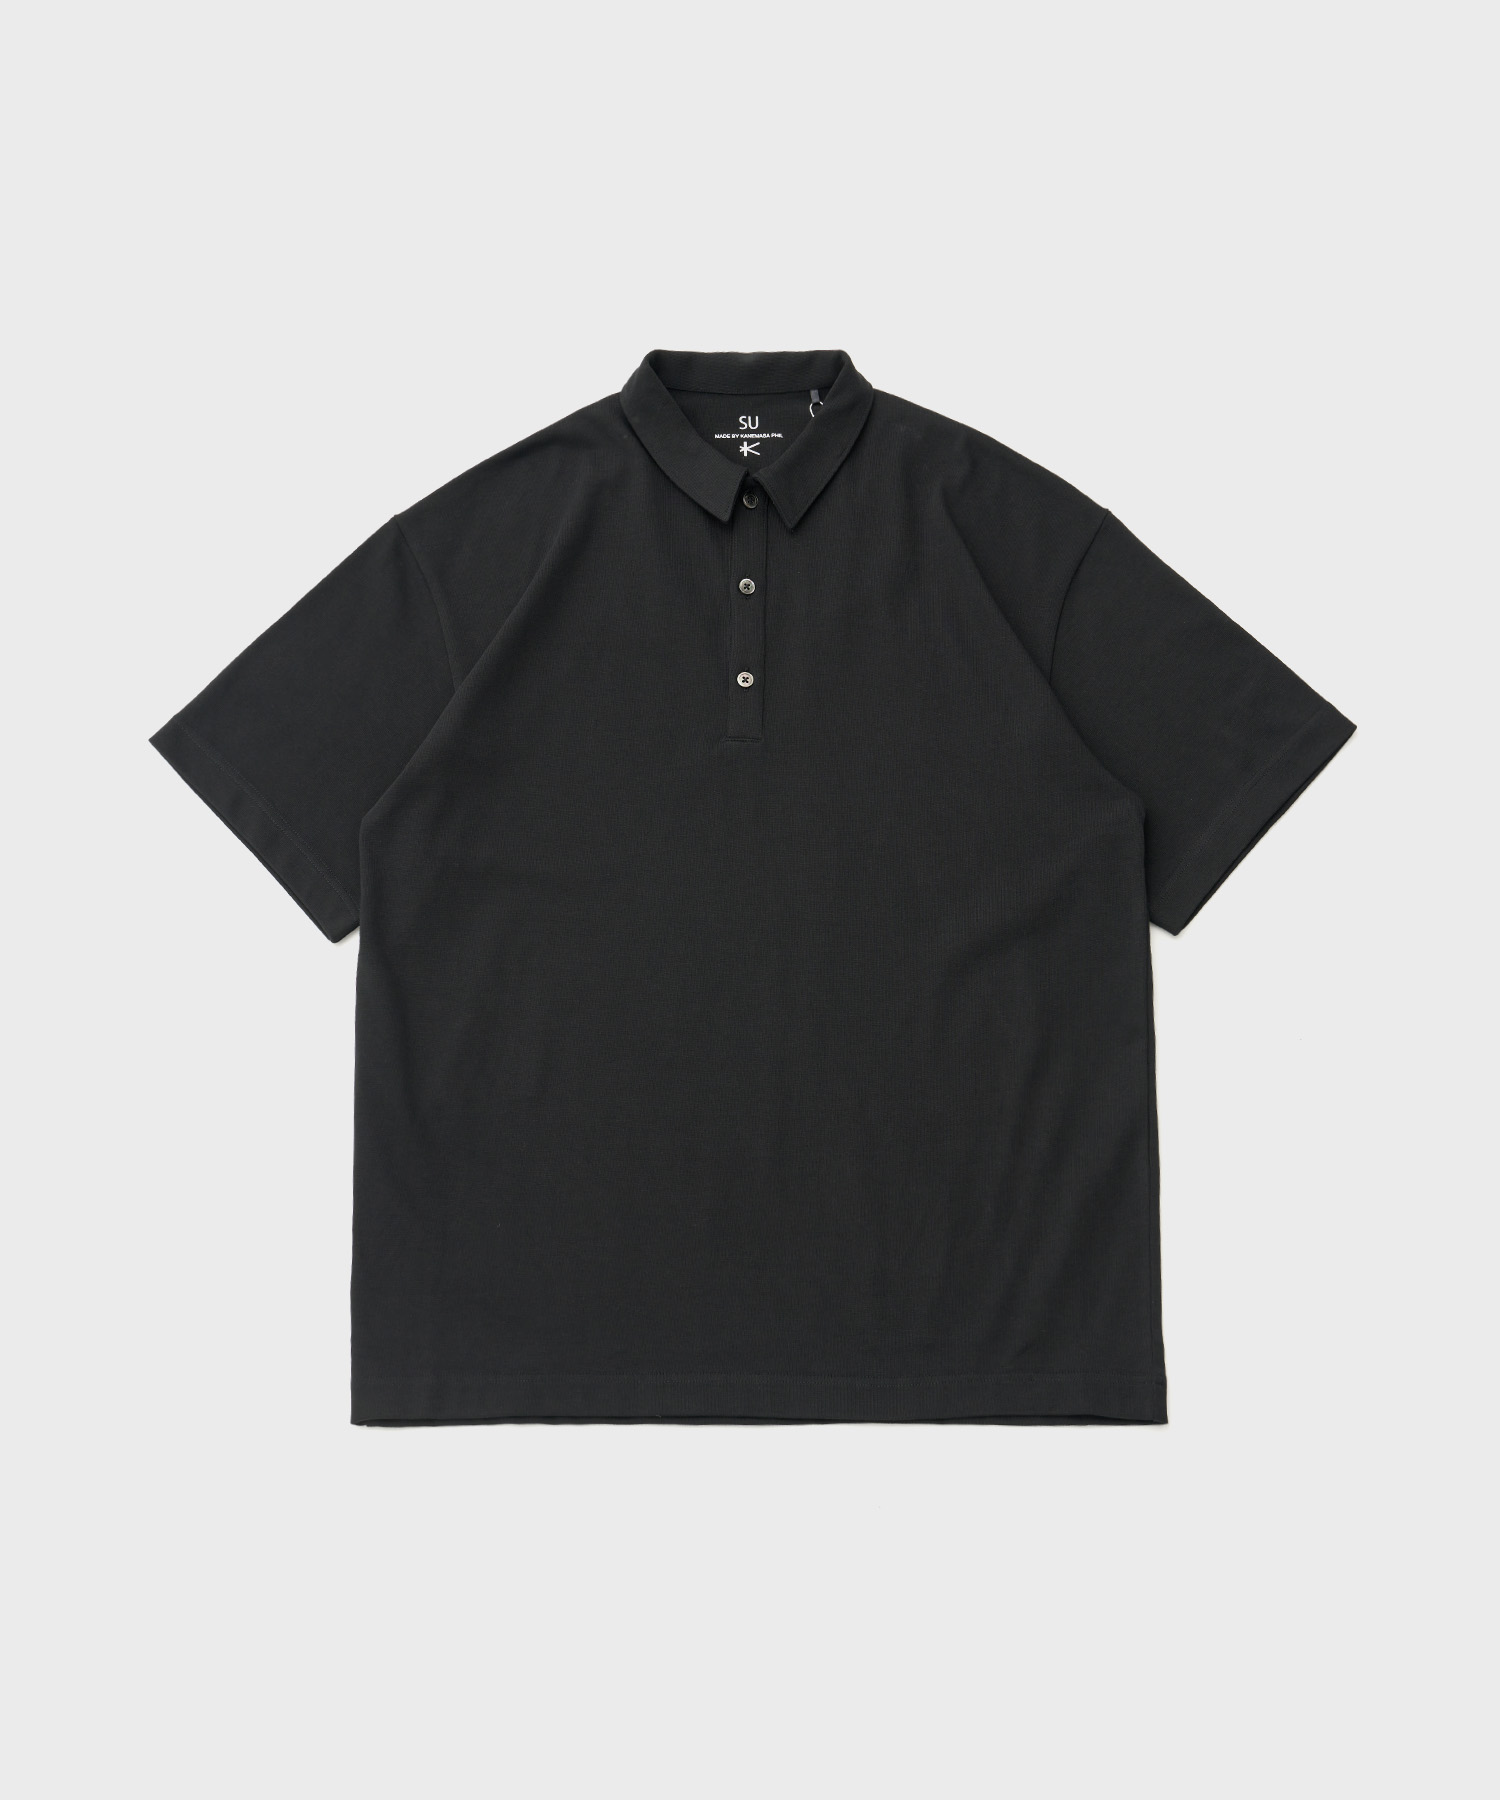 Recycled Suvin High-Twist Yarn Poloshirt (Black)